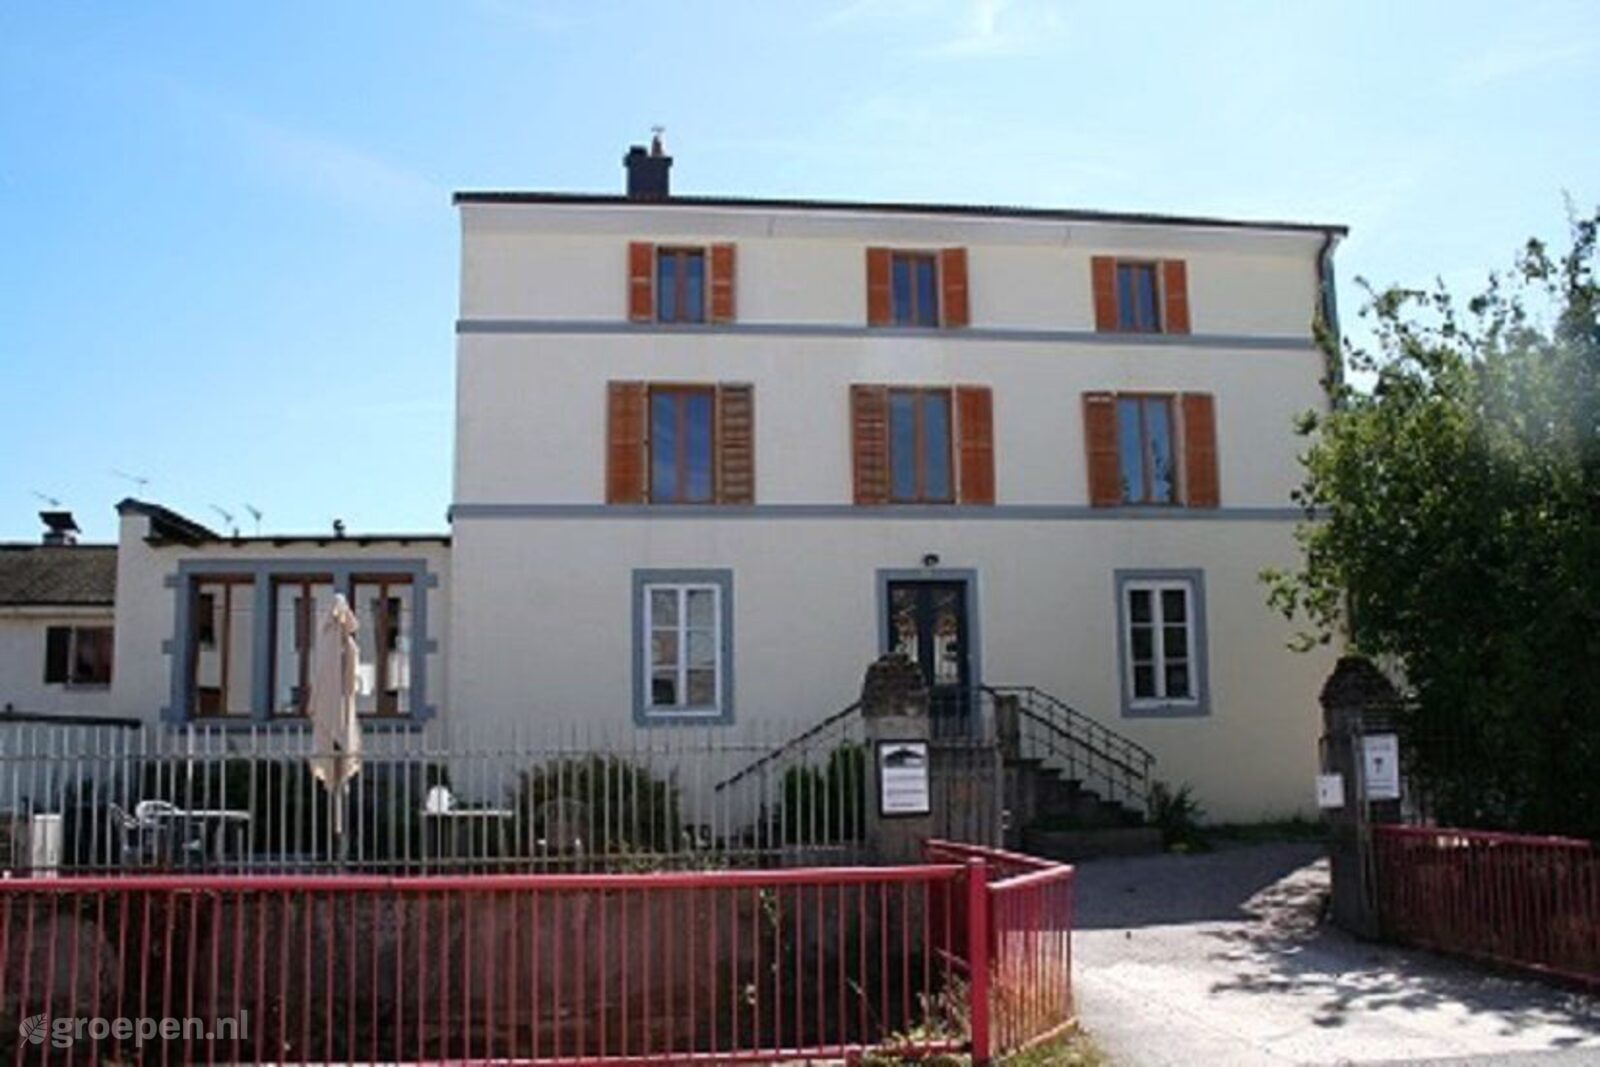 Group accommodation Granges-sur-Vologne